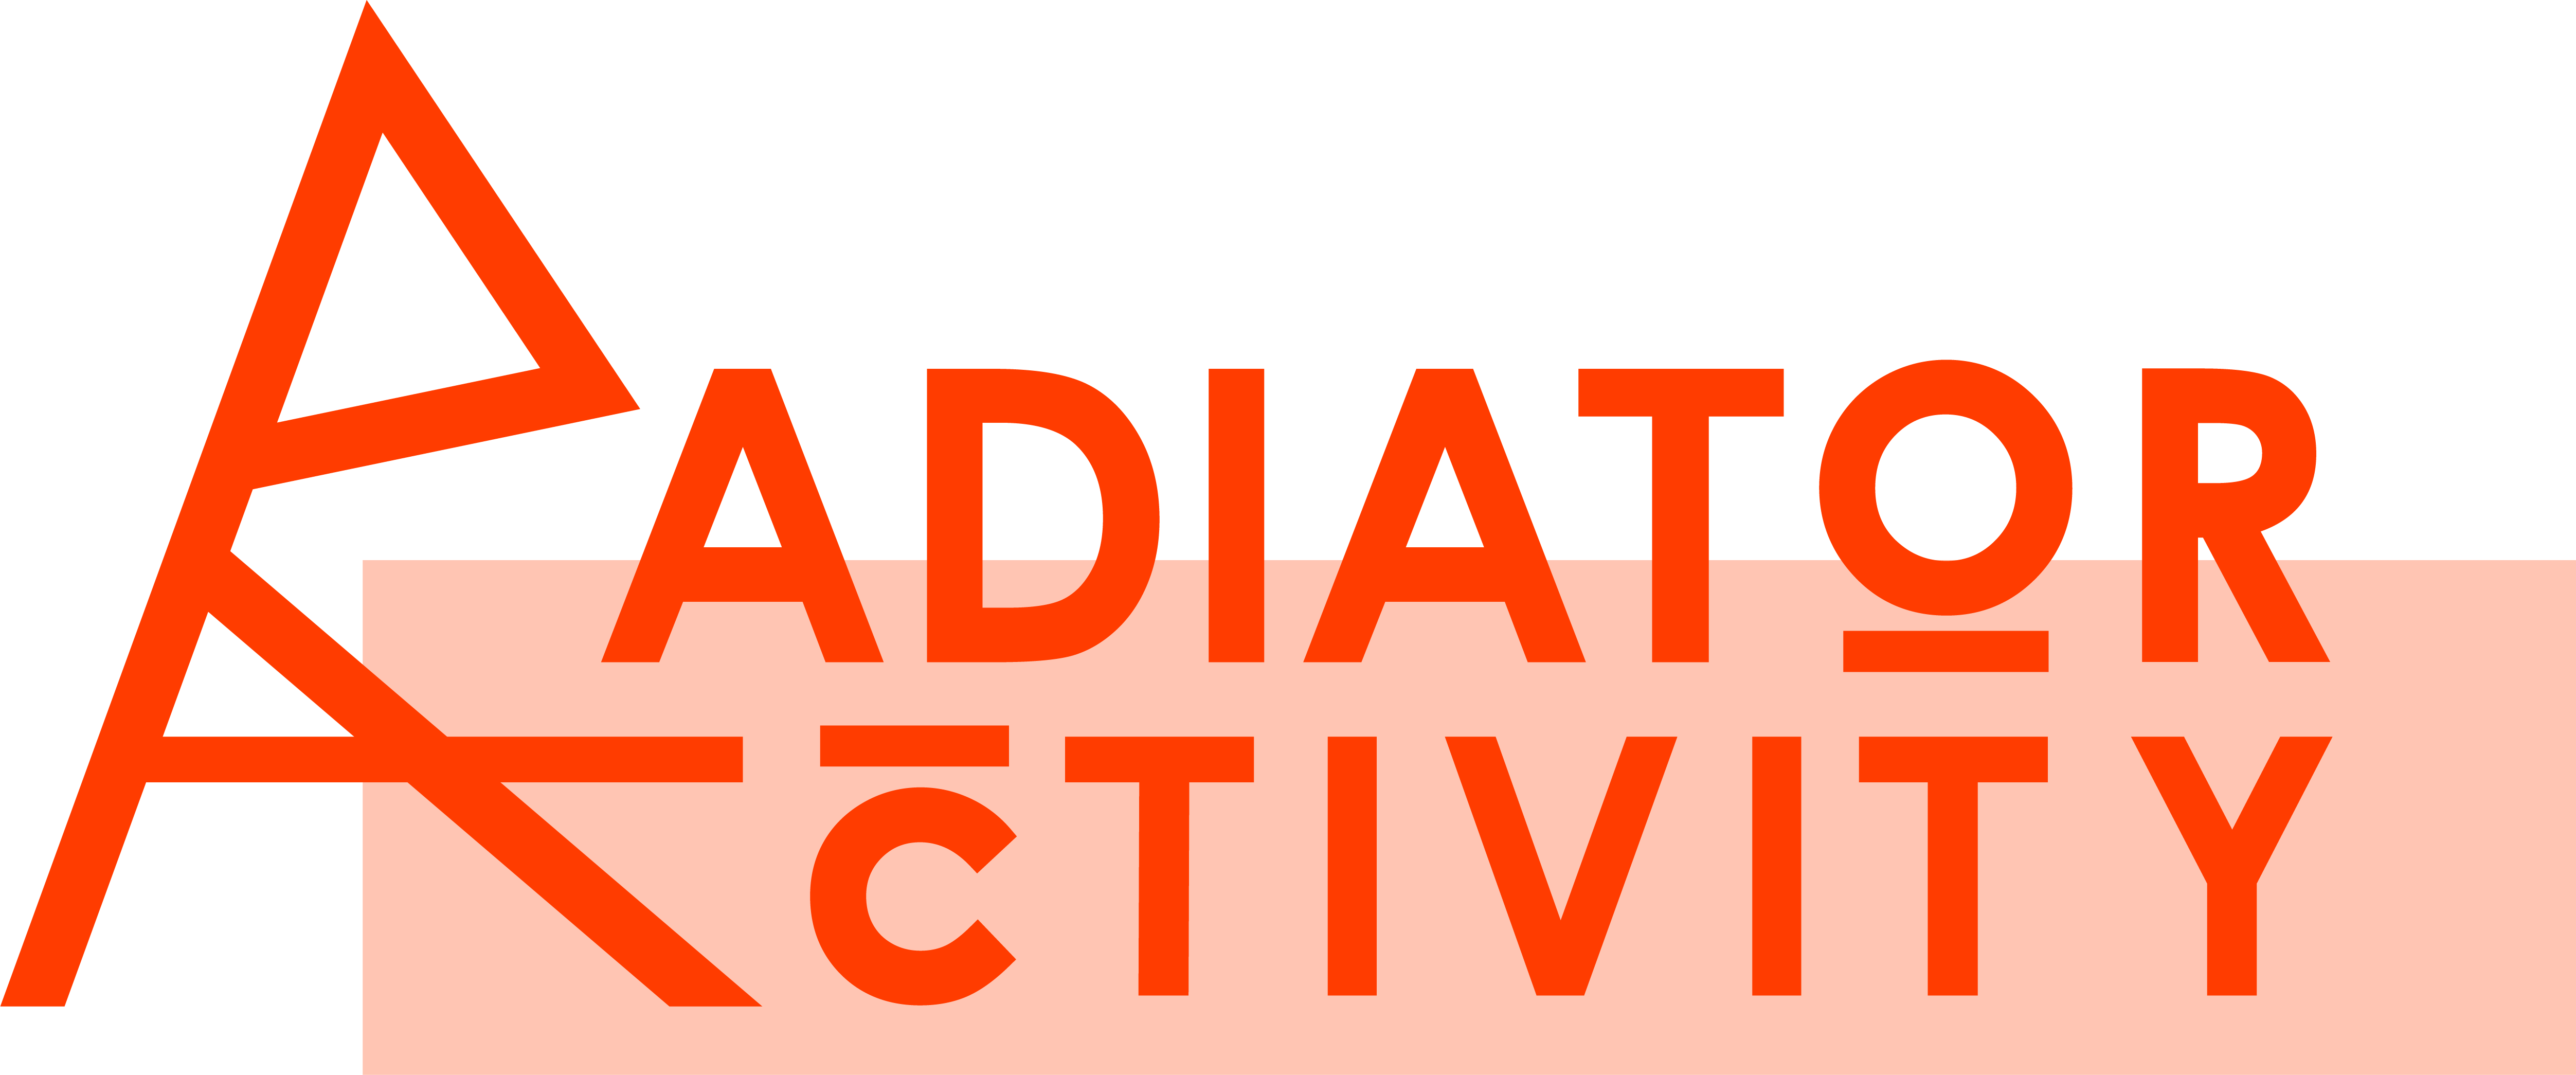 radiator activity logo